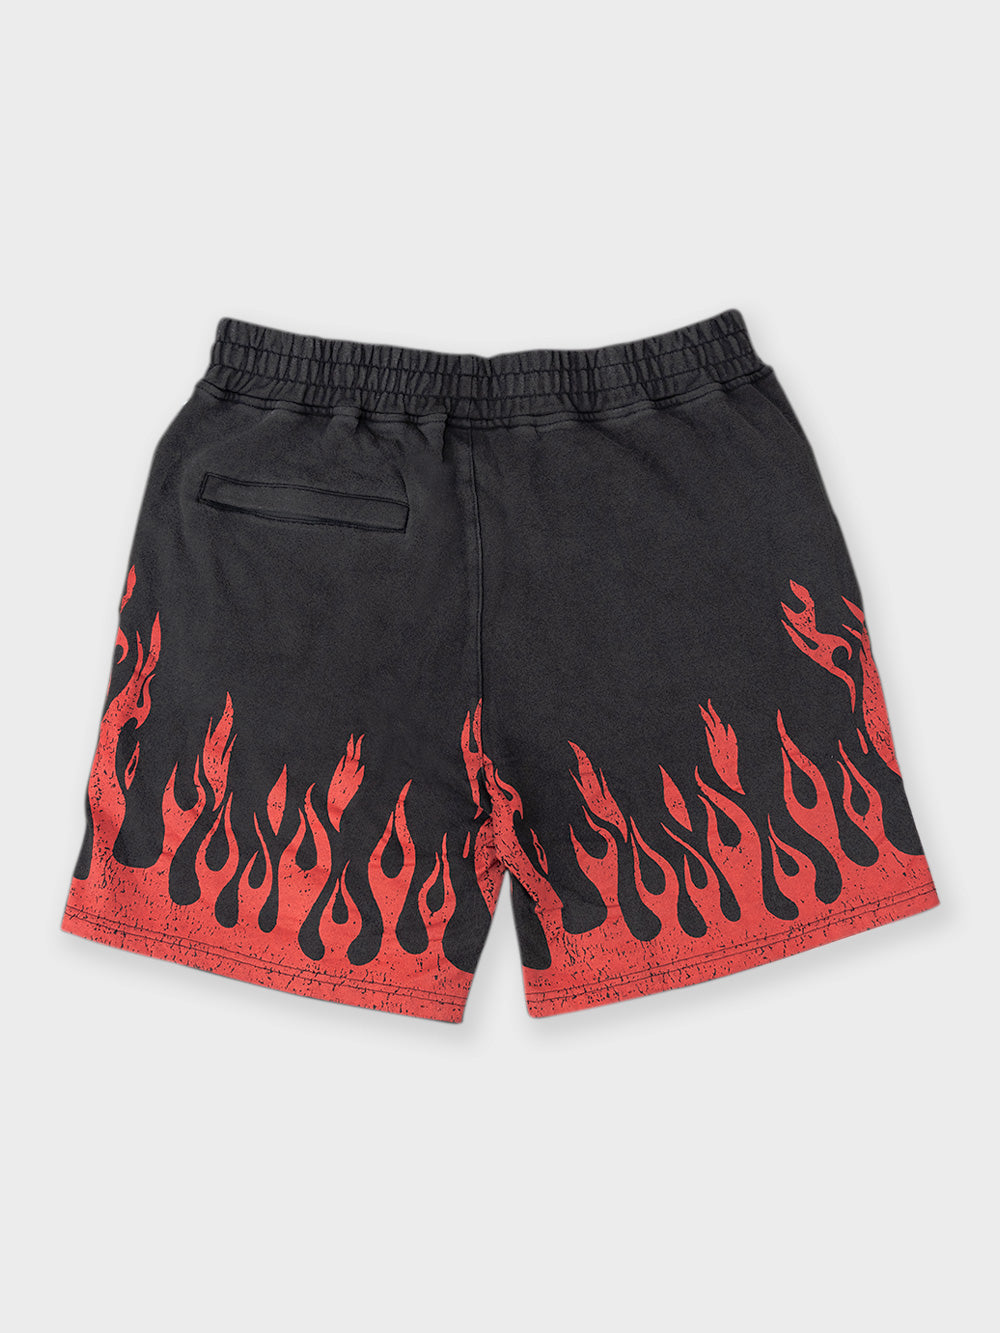 Burner Jersey Shorts - Red